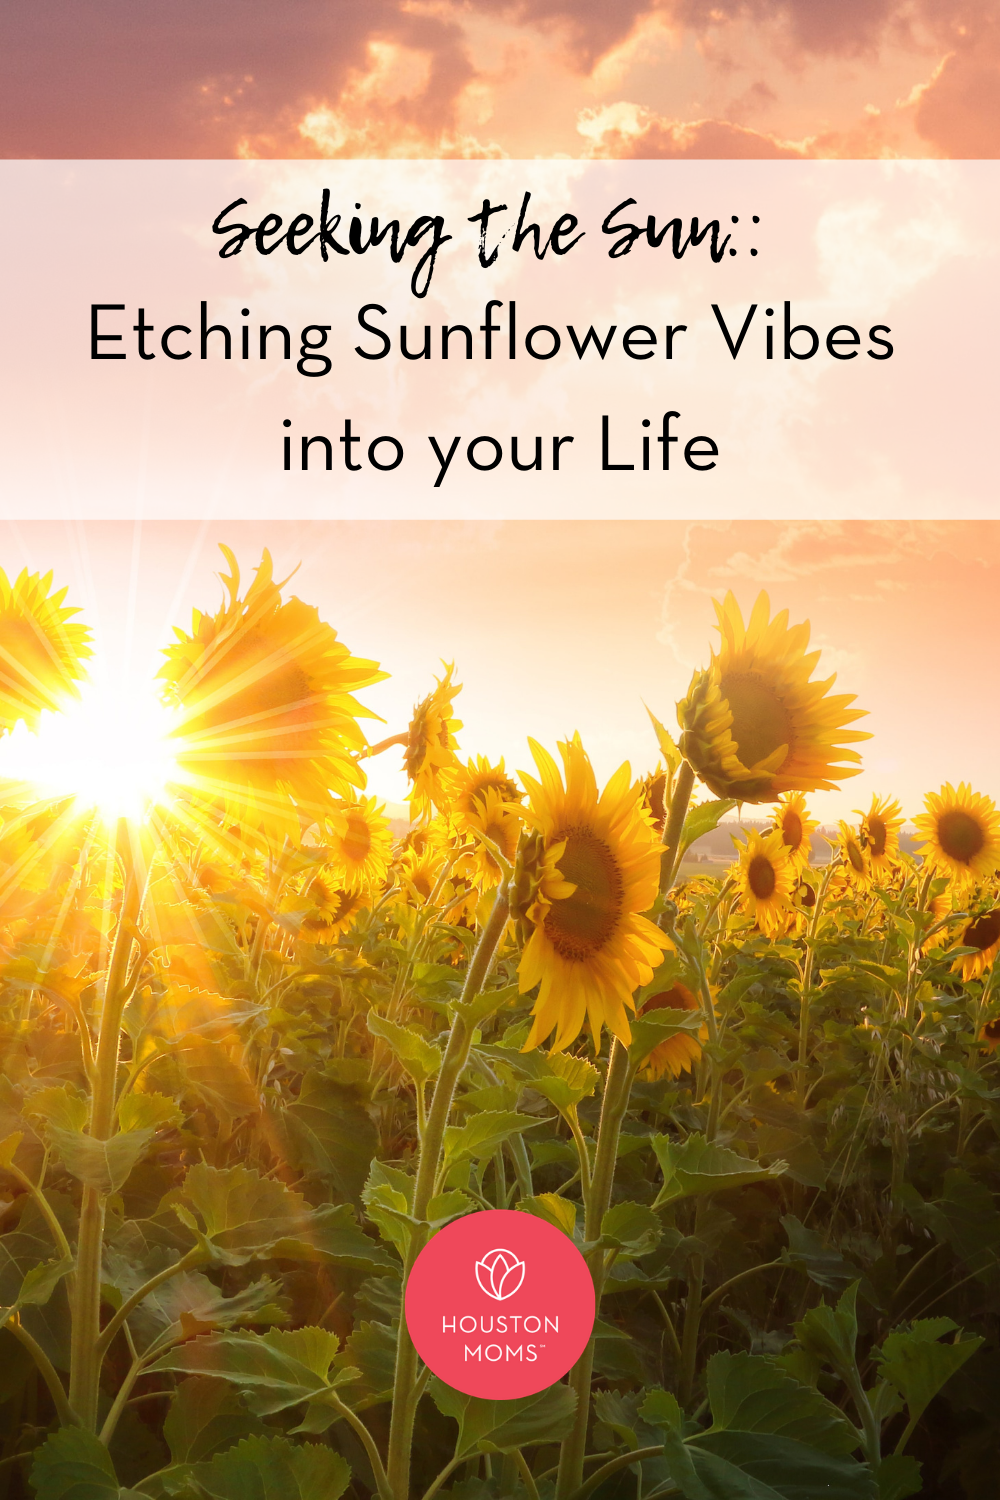 Houston Moms 'Seeking the Sun:: Etching Sunflower Vibes into Your Life" #houstonmoms #houstonmomsblog #momsaroundhouston